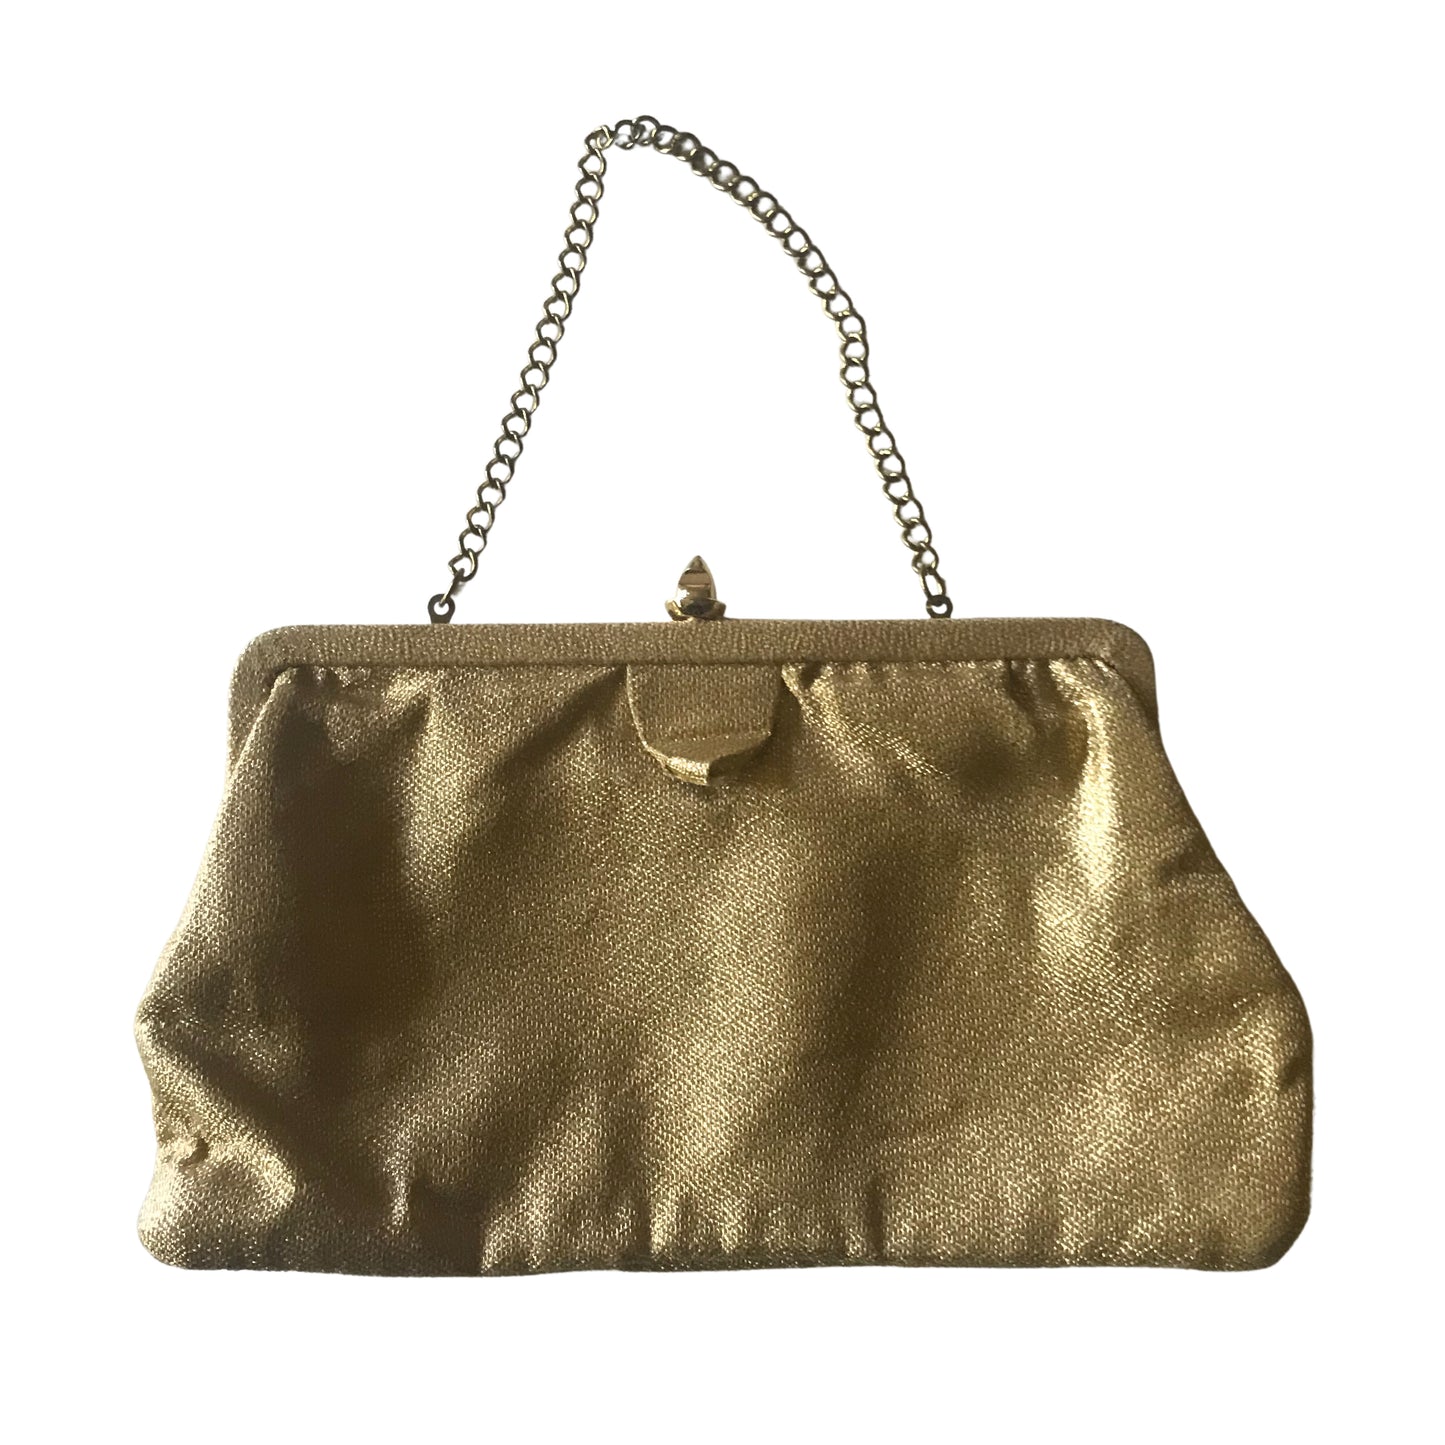 Golden Girl Metallic Evening Bag with Chain Strap circa 1950s